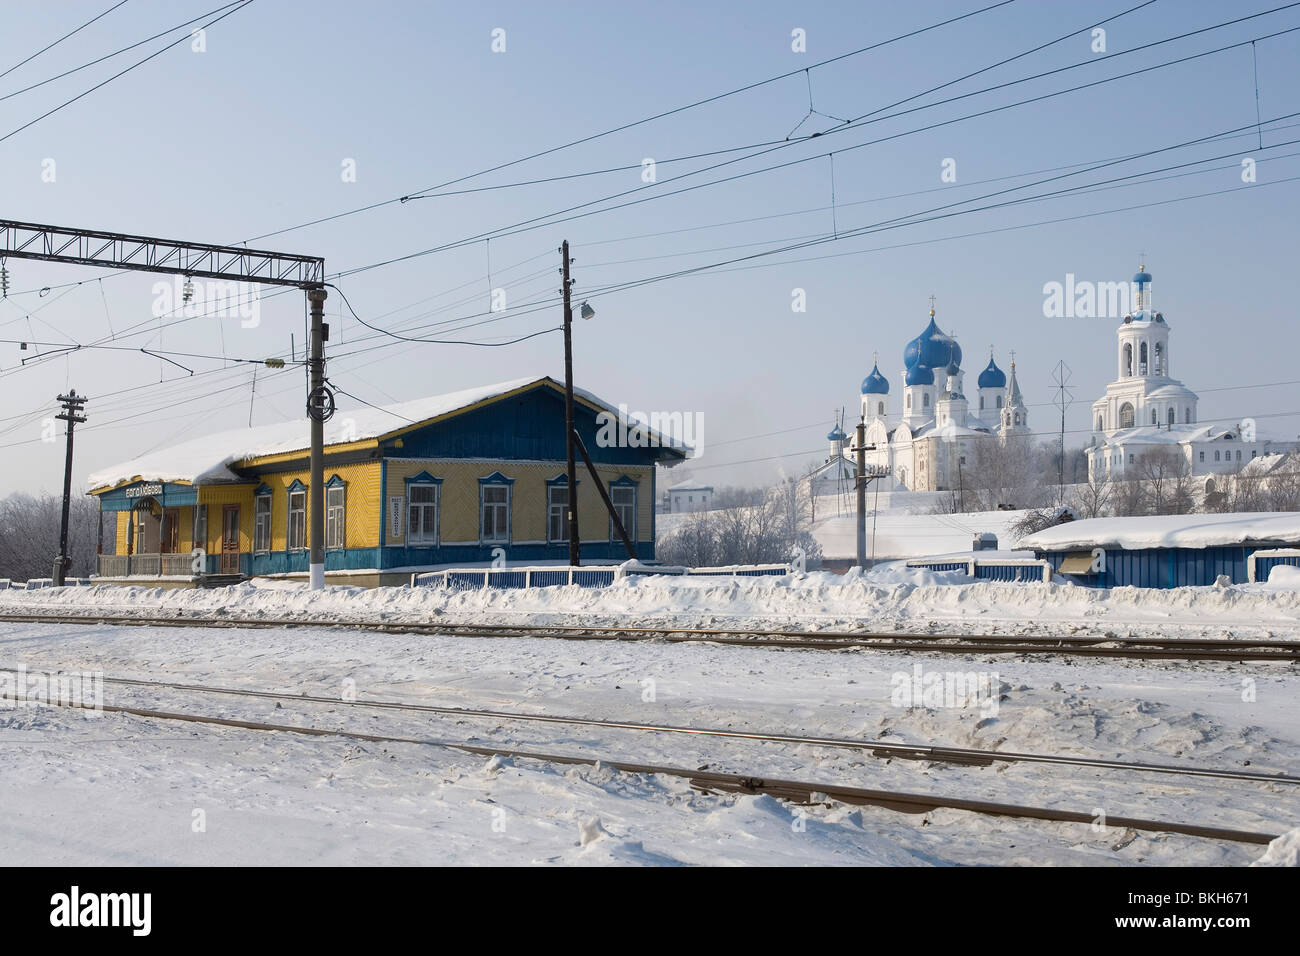 Russia,Golden Ring,Bogoliubovo,Monastery buildings,Winter,snow,railway Stock Photo